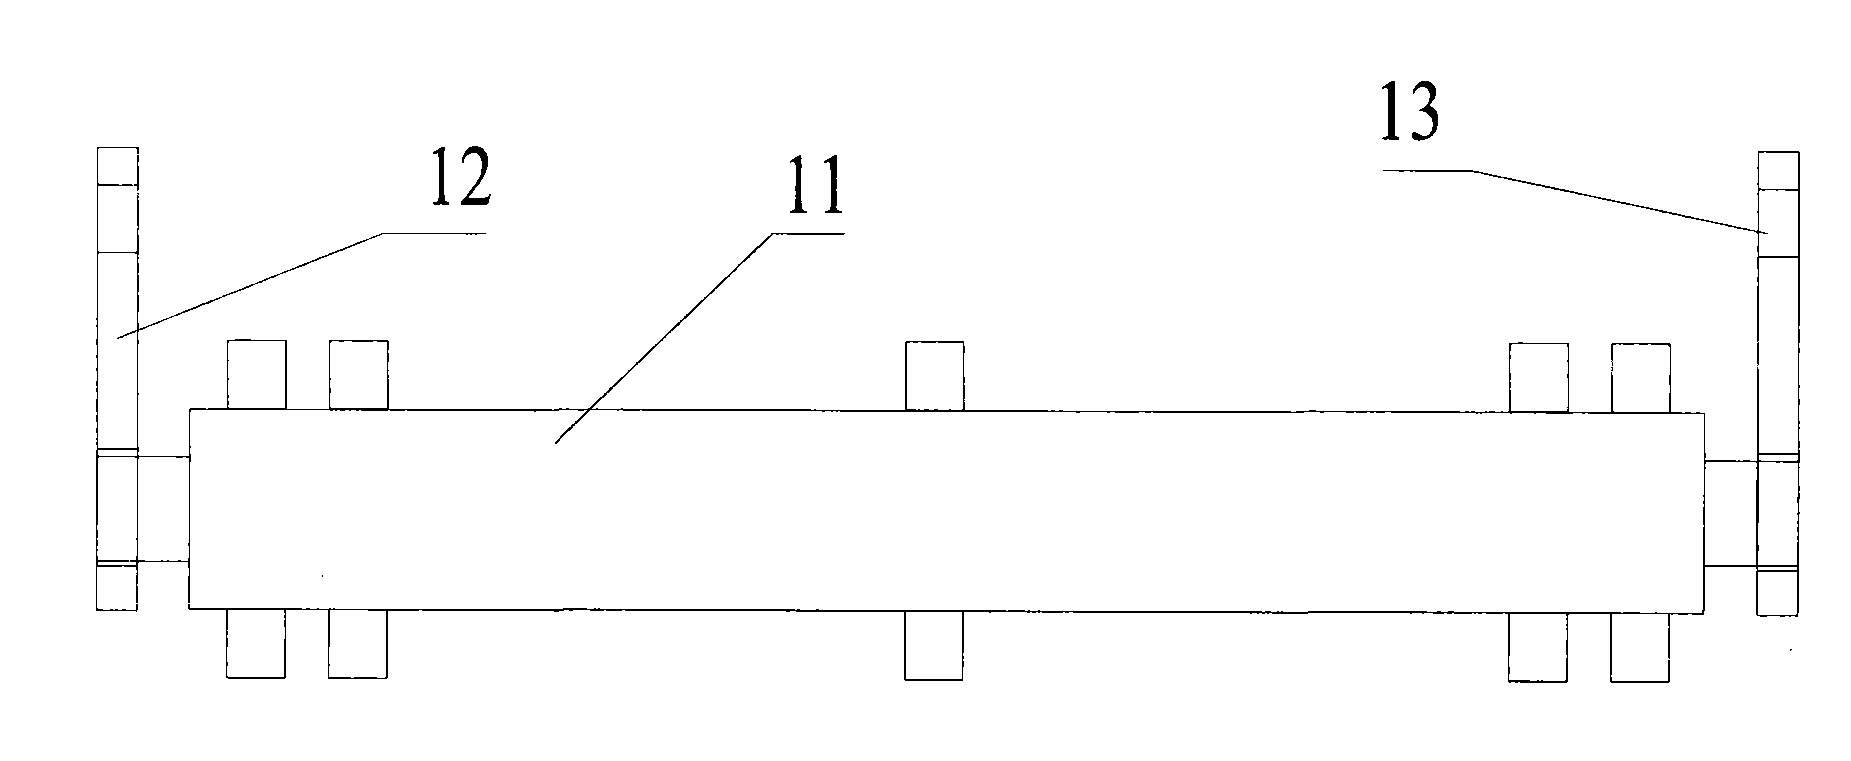 Method for hoisting by lifting belt vertically